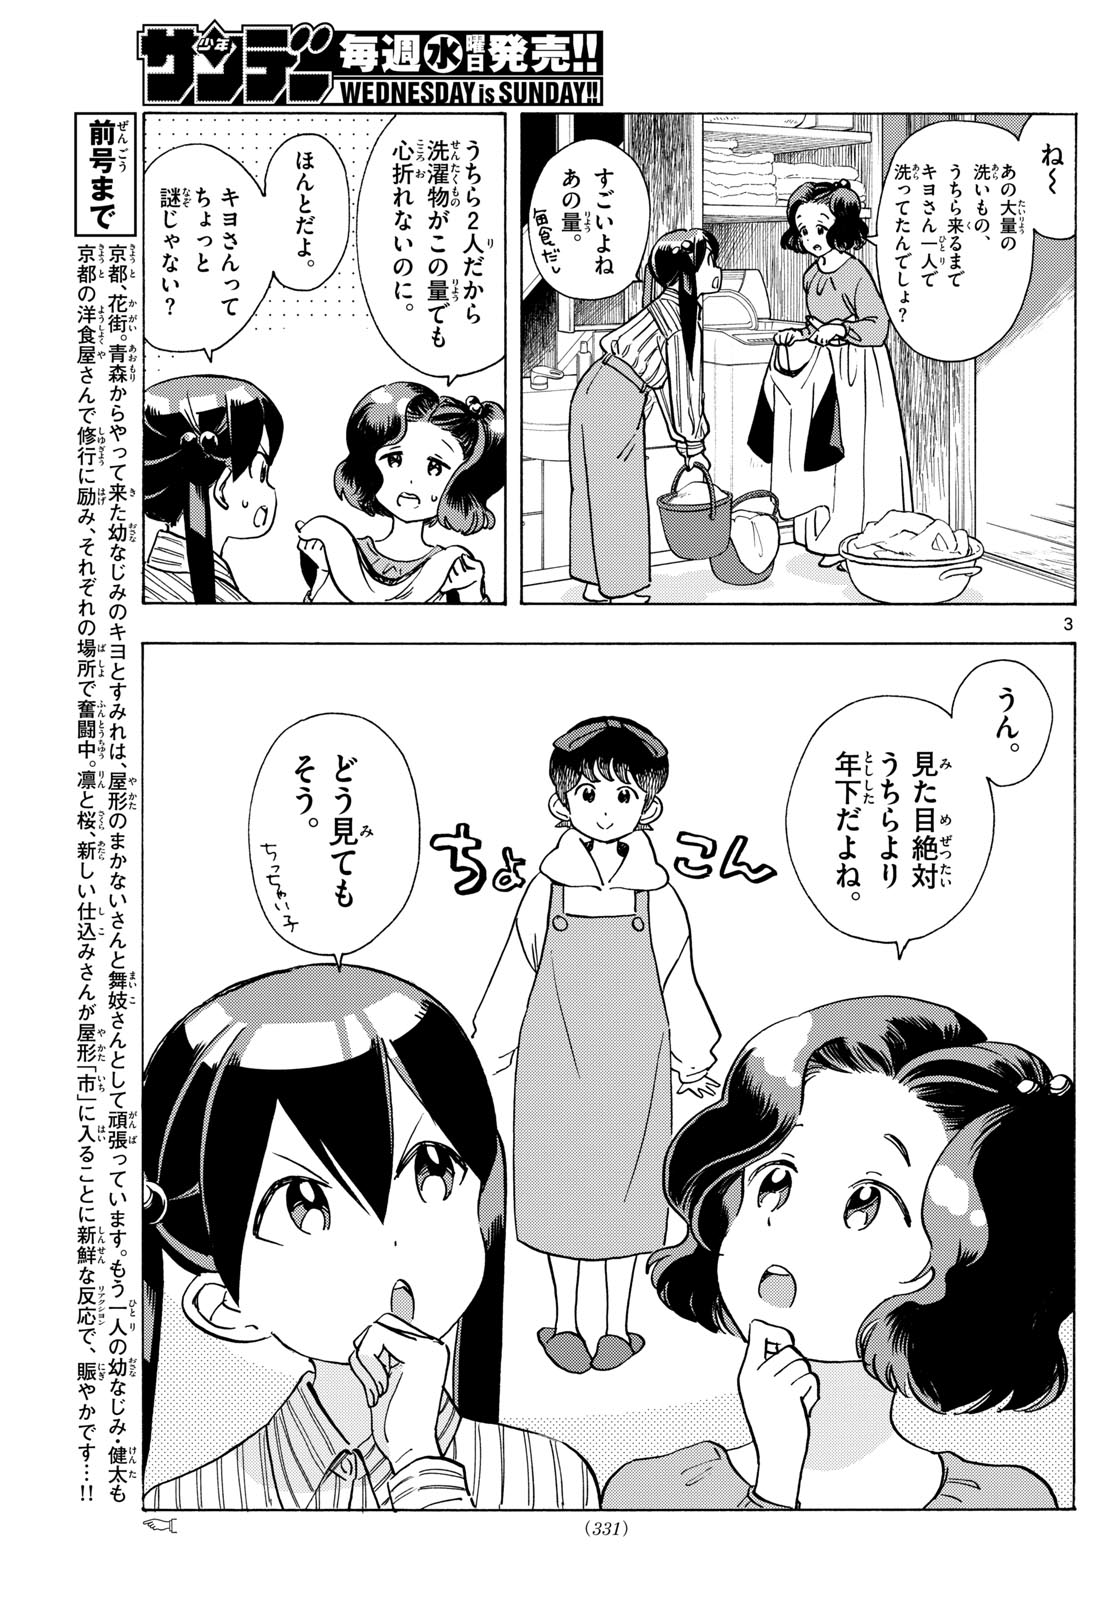 Maiko-san Chi no Makanai-san - Chapter 289 - Page 3